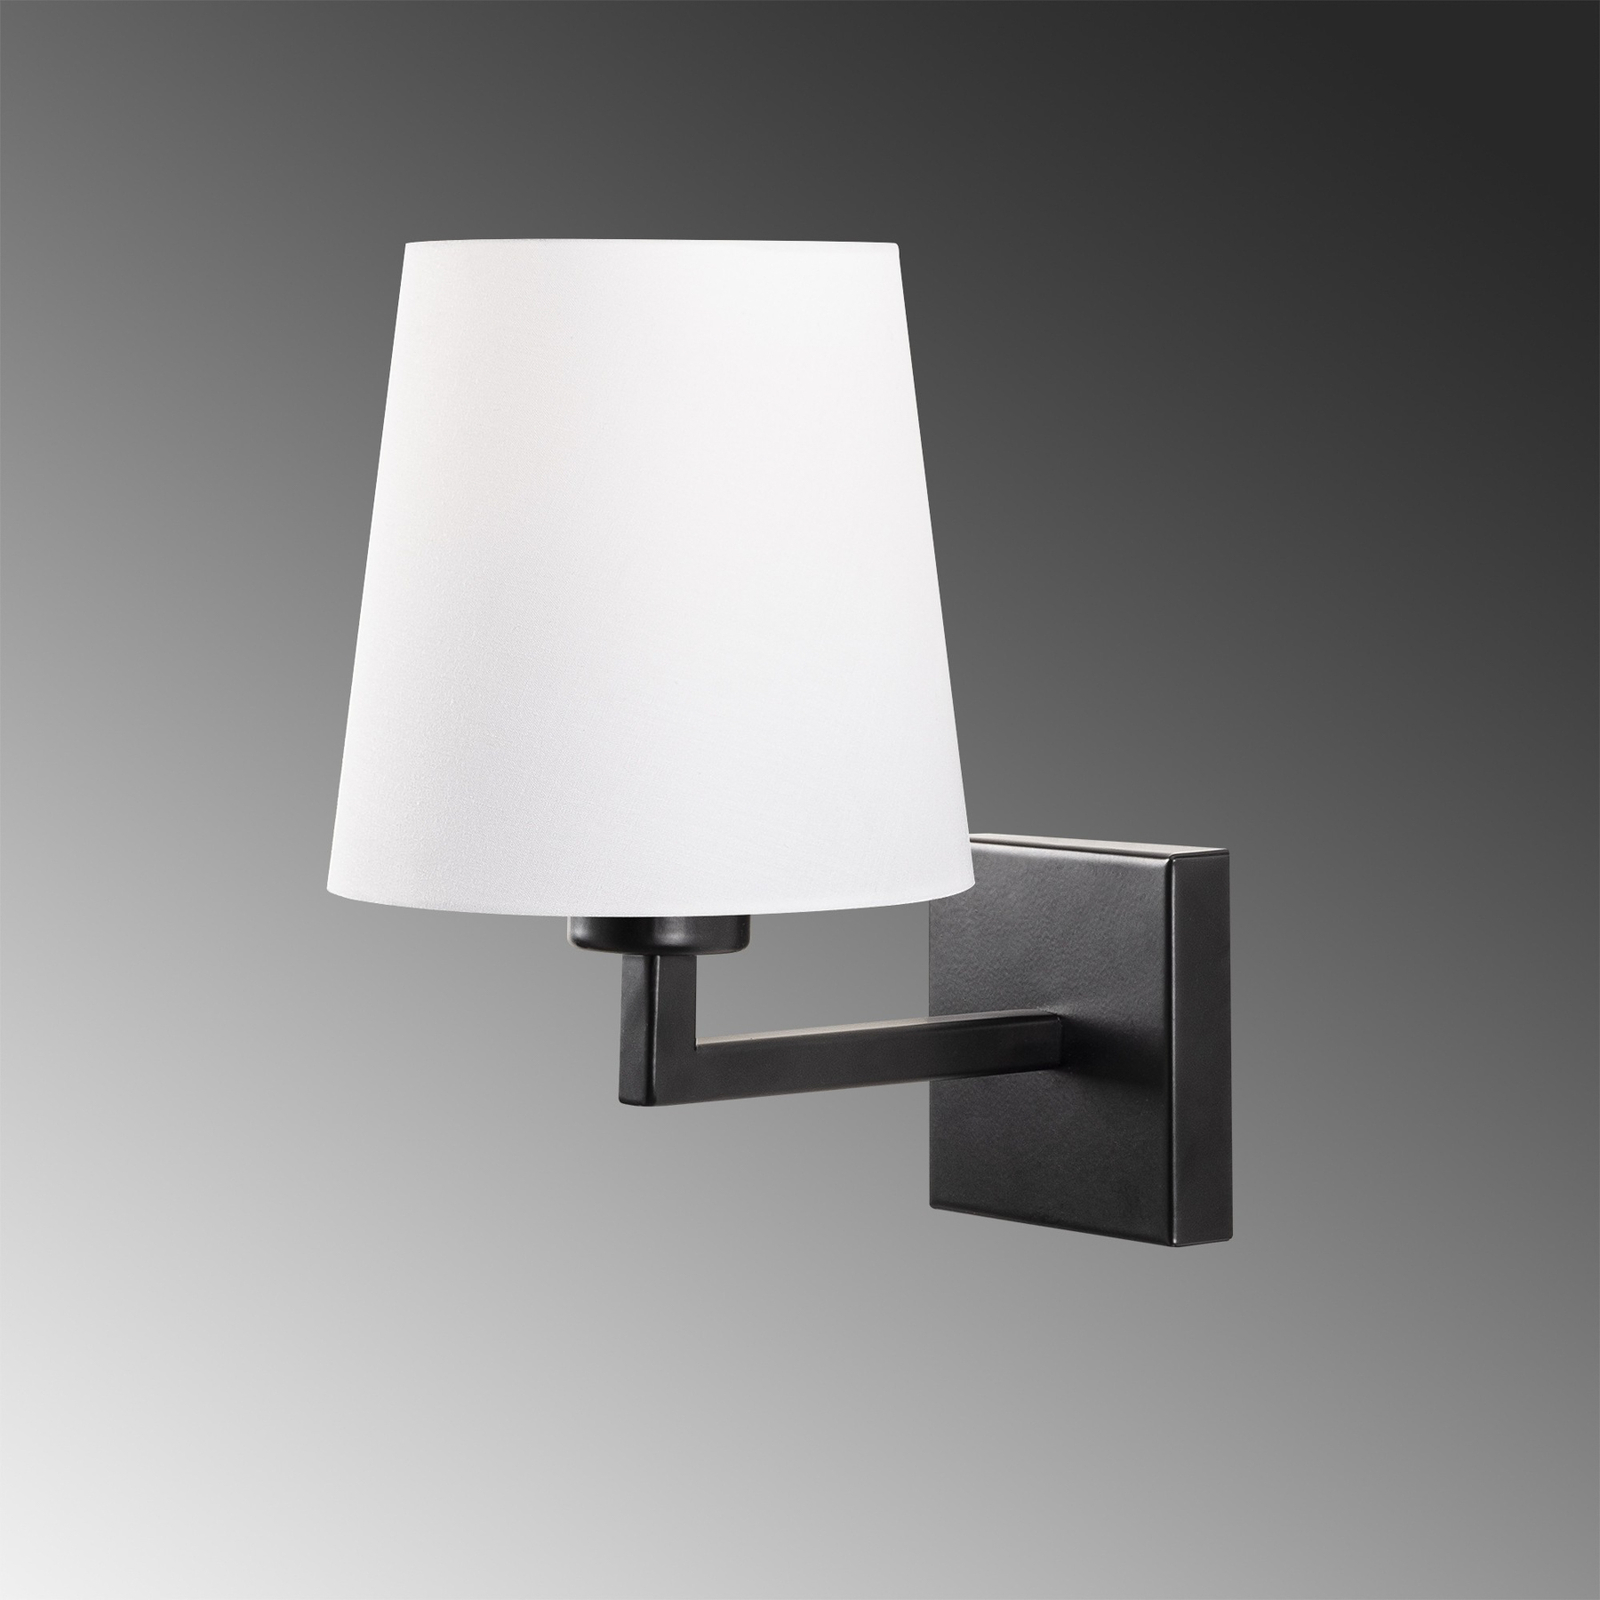 Profil 4659 wall lamp, blac,k white fabric